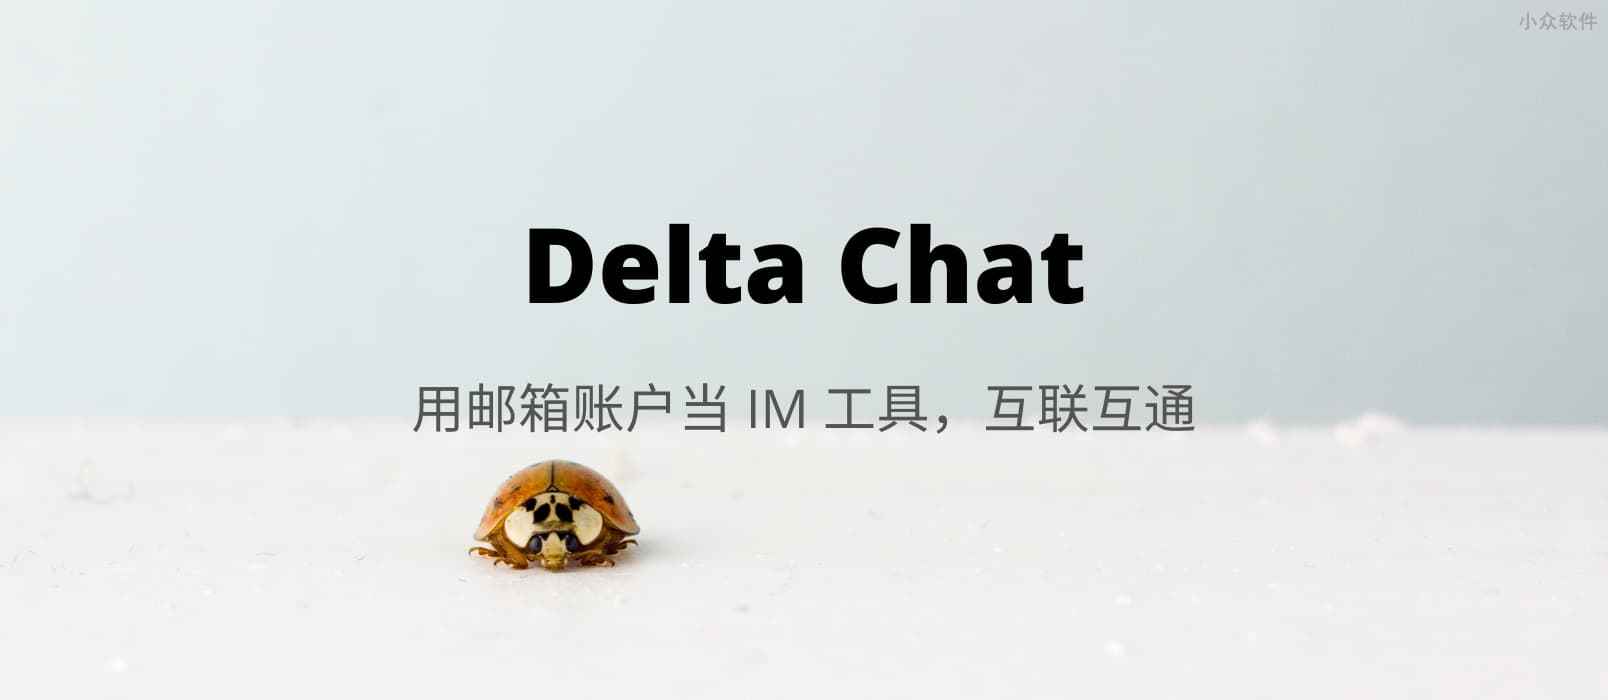 Delta Chat - 如果早 10 年，用邮件当 IM 可能会火 1